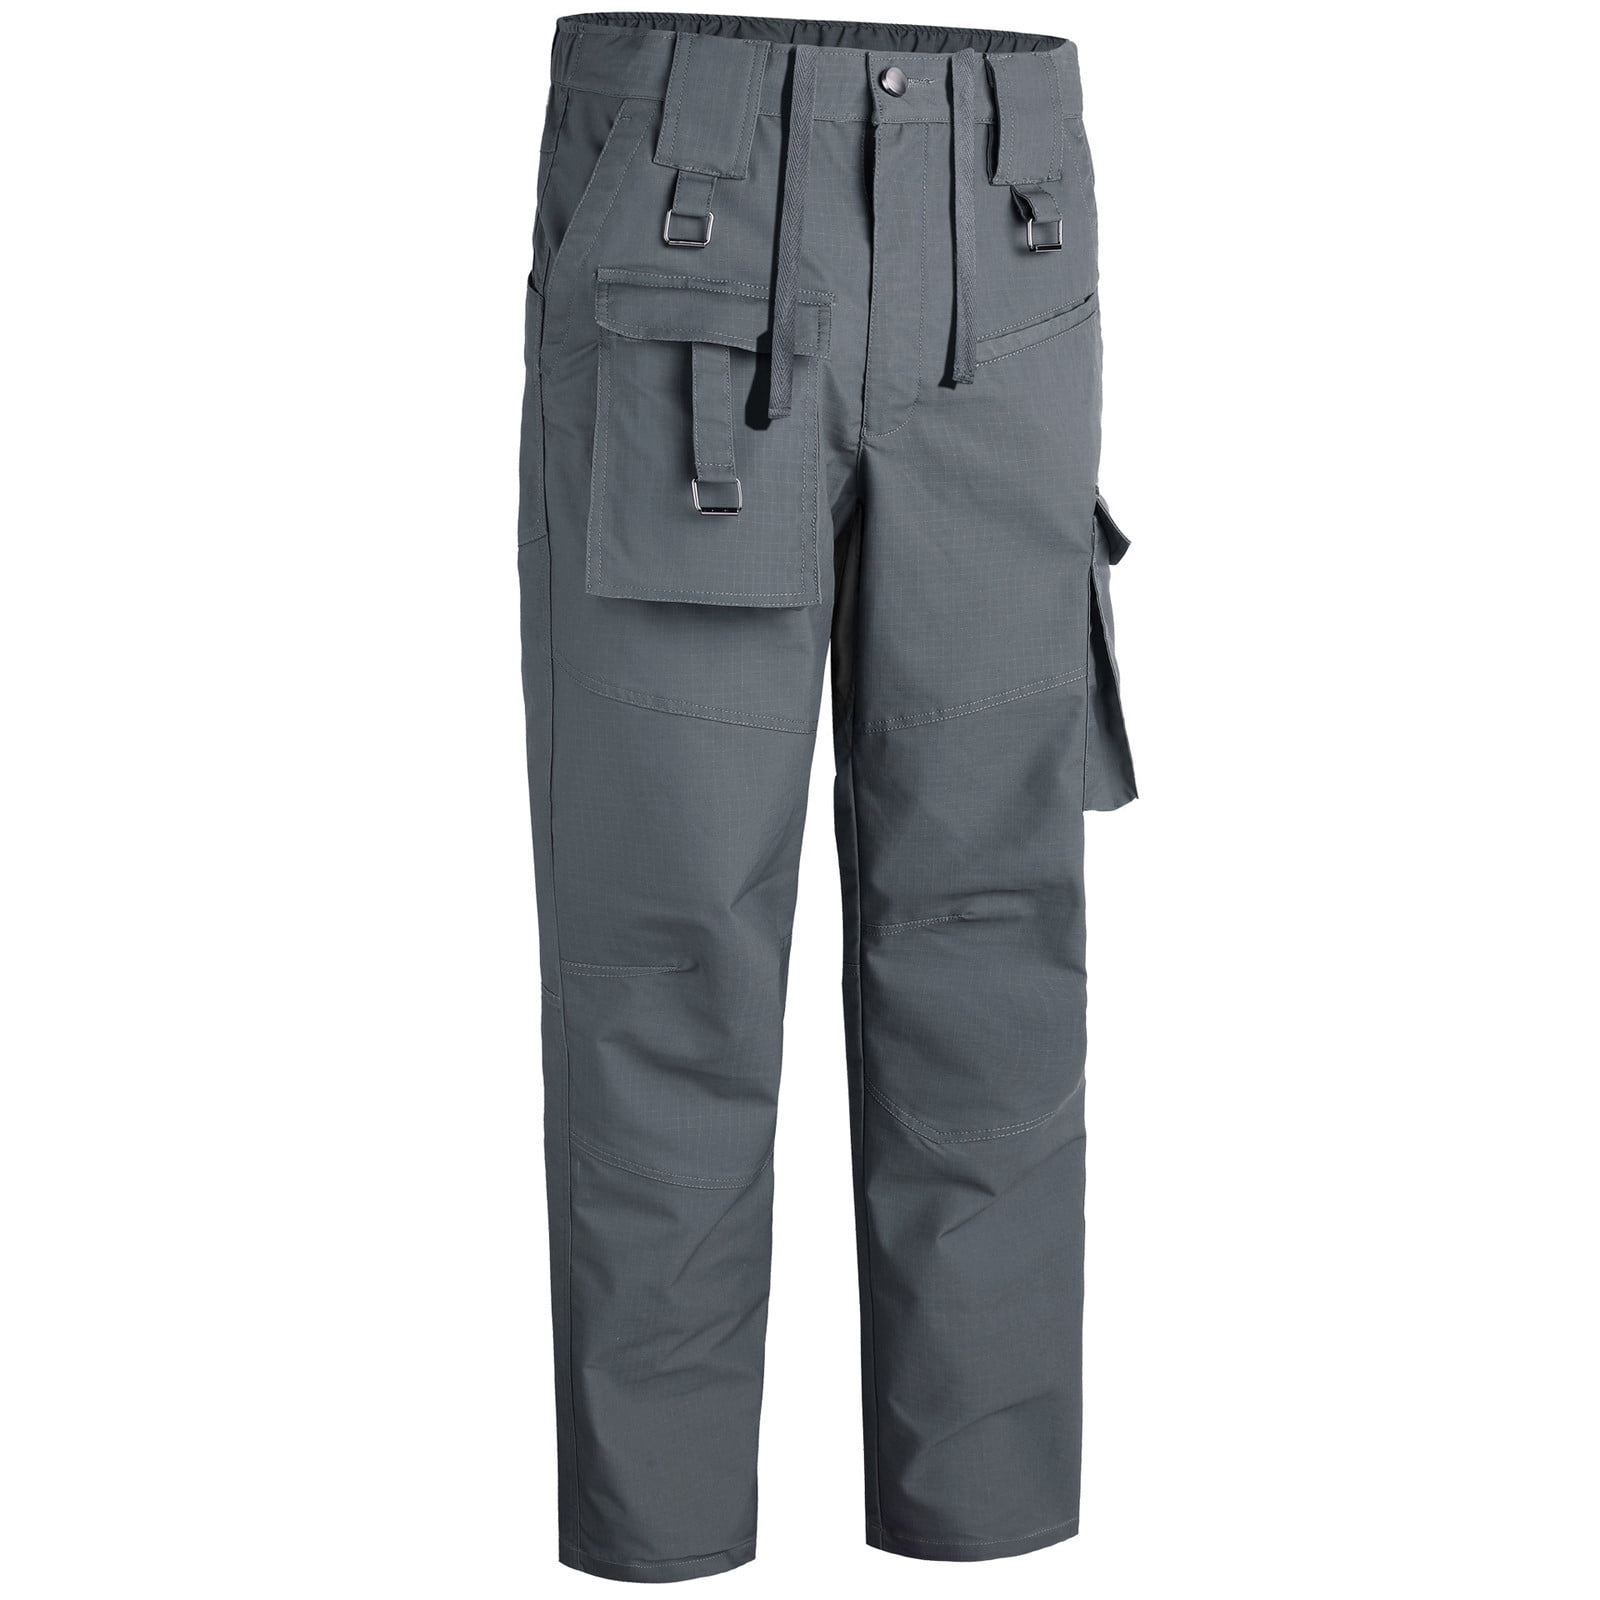 PBNBP Cargo Pants for Men,Mens Solid Cargo Pants Multi Pocket Straight ...